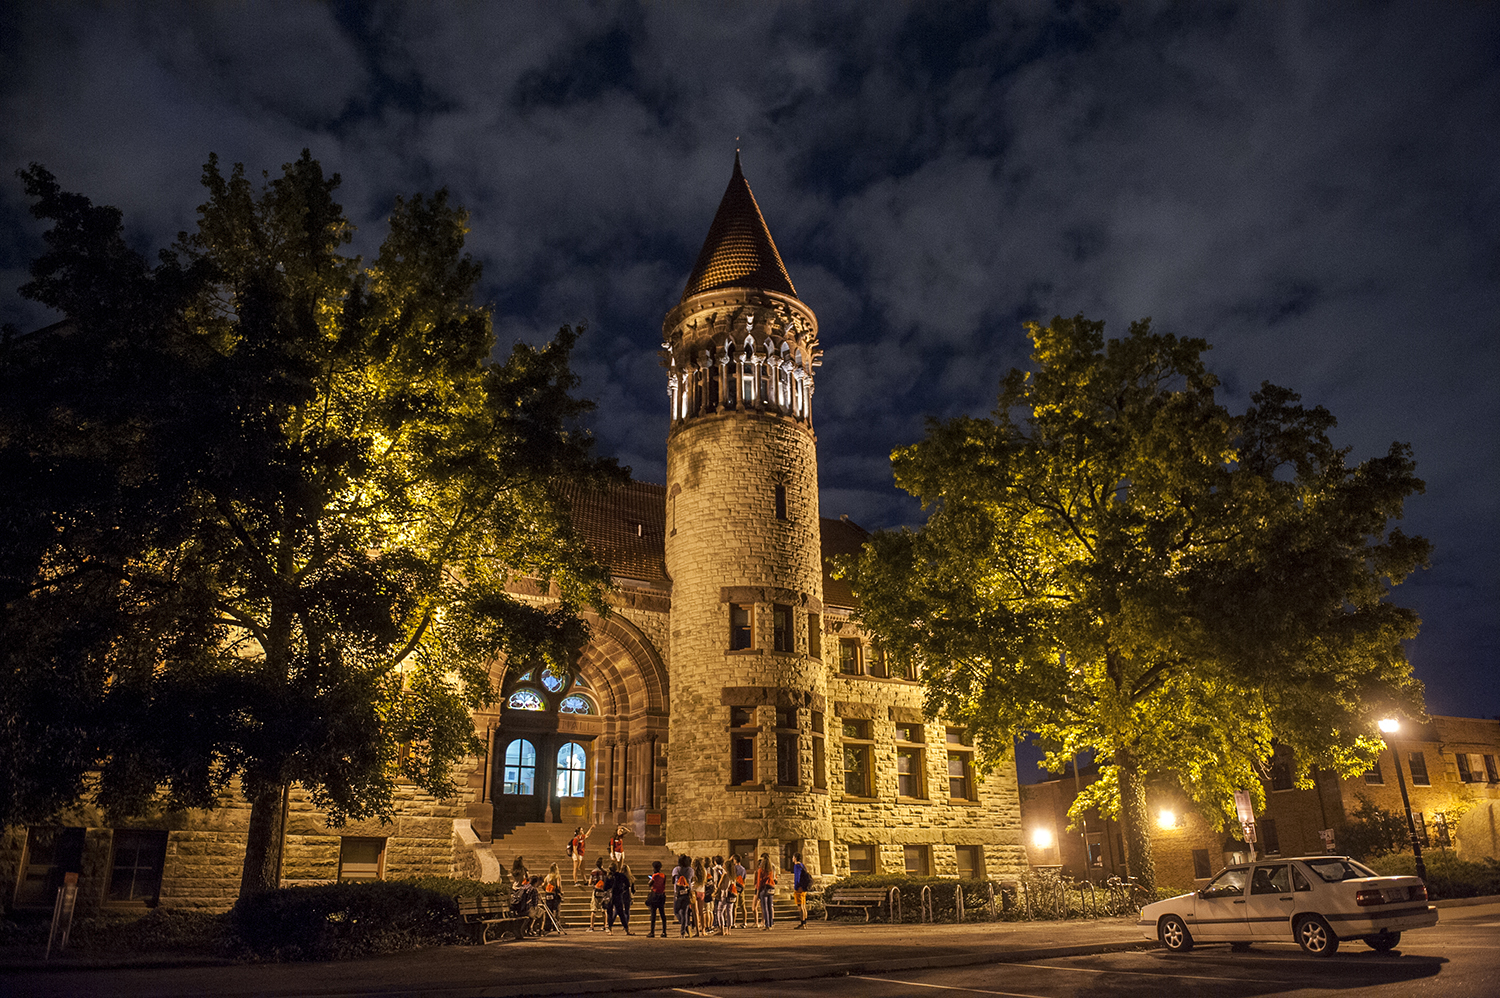 Orton Hall | The Ohio State University